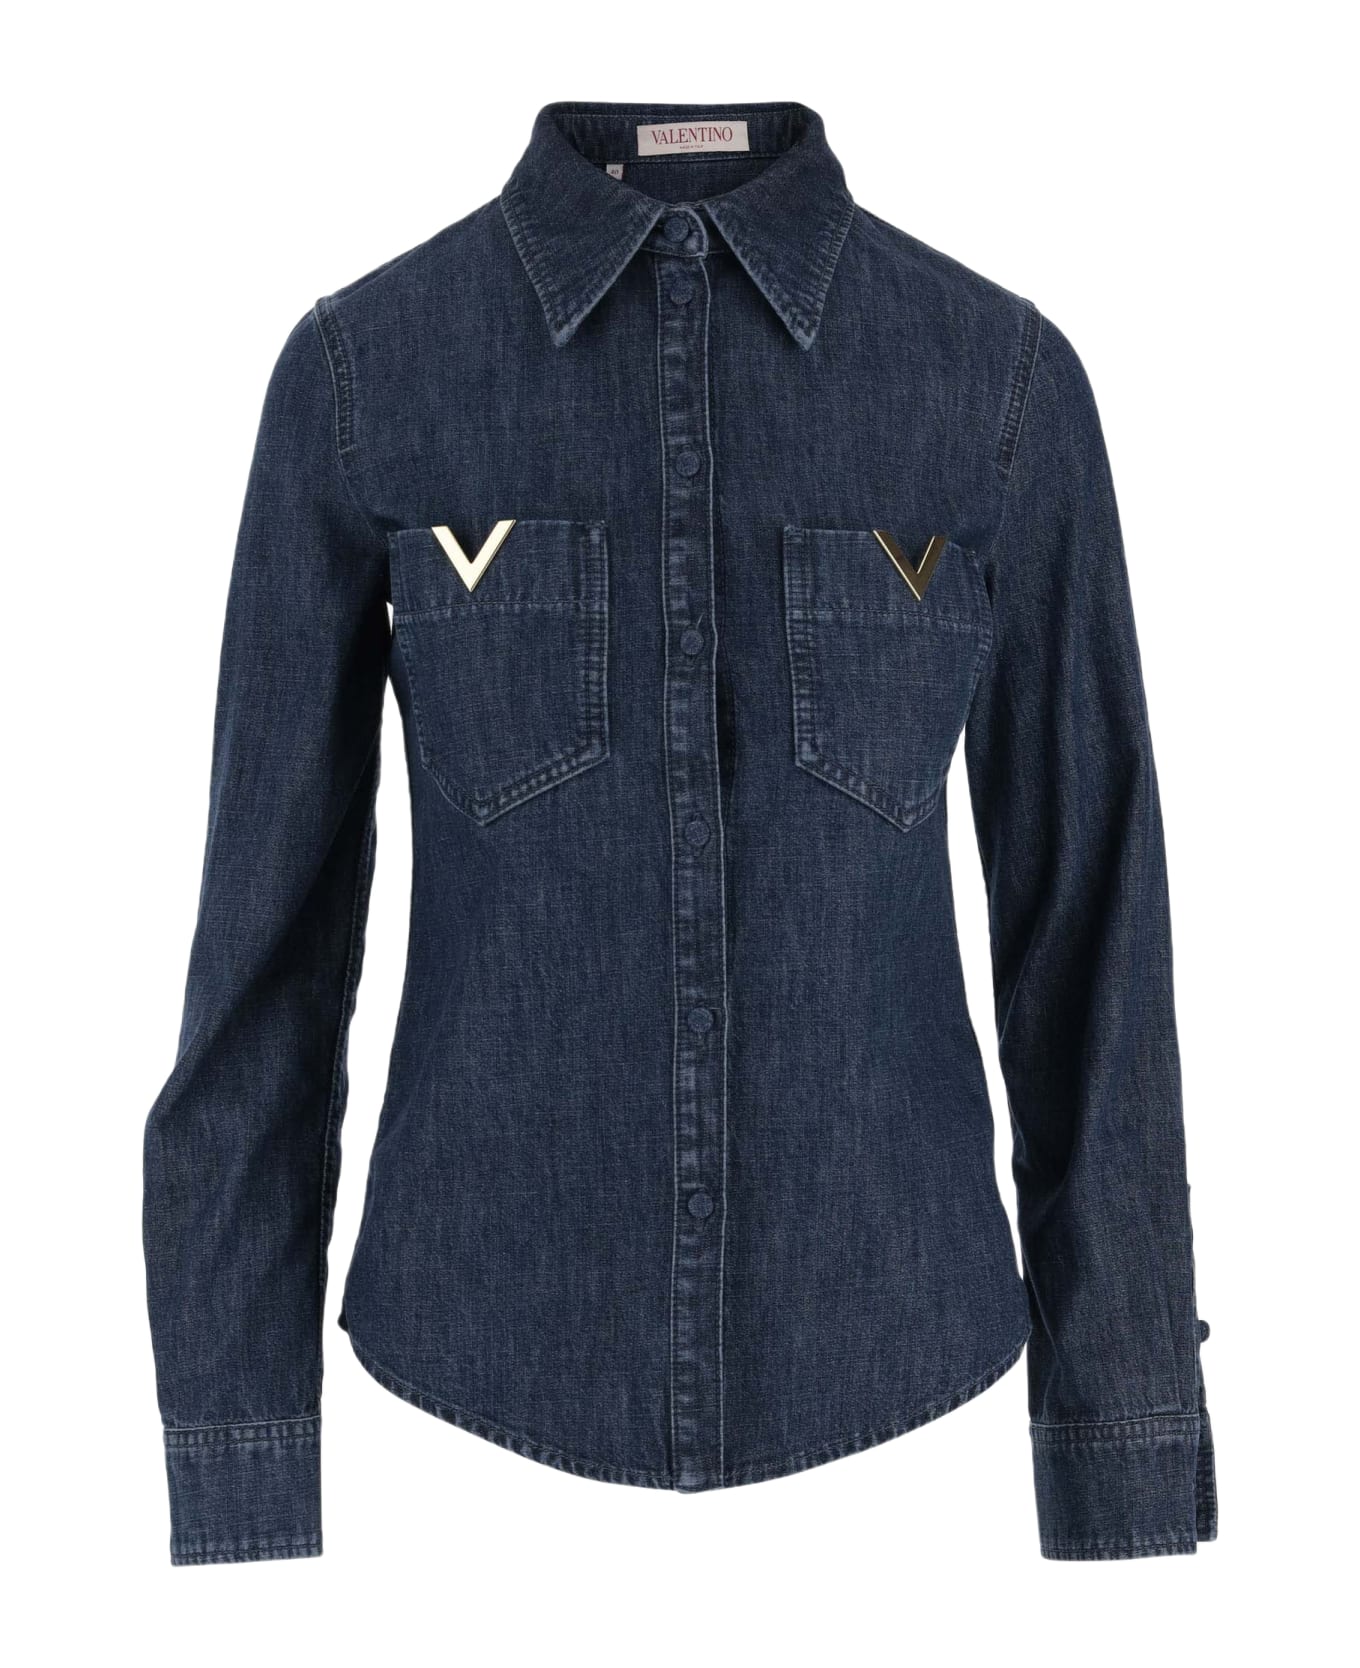 Valentino Cotton Moda Shirt With Vlogo - Moda